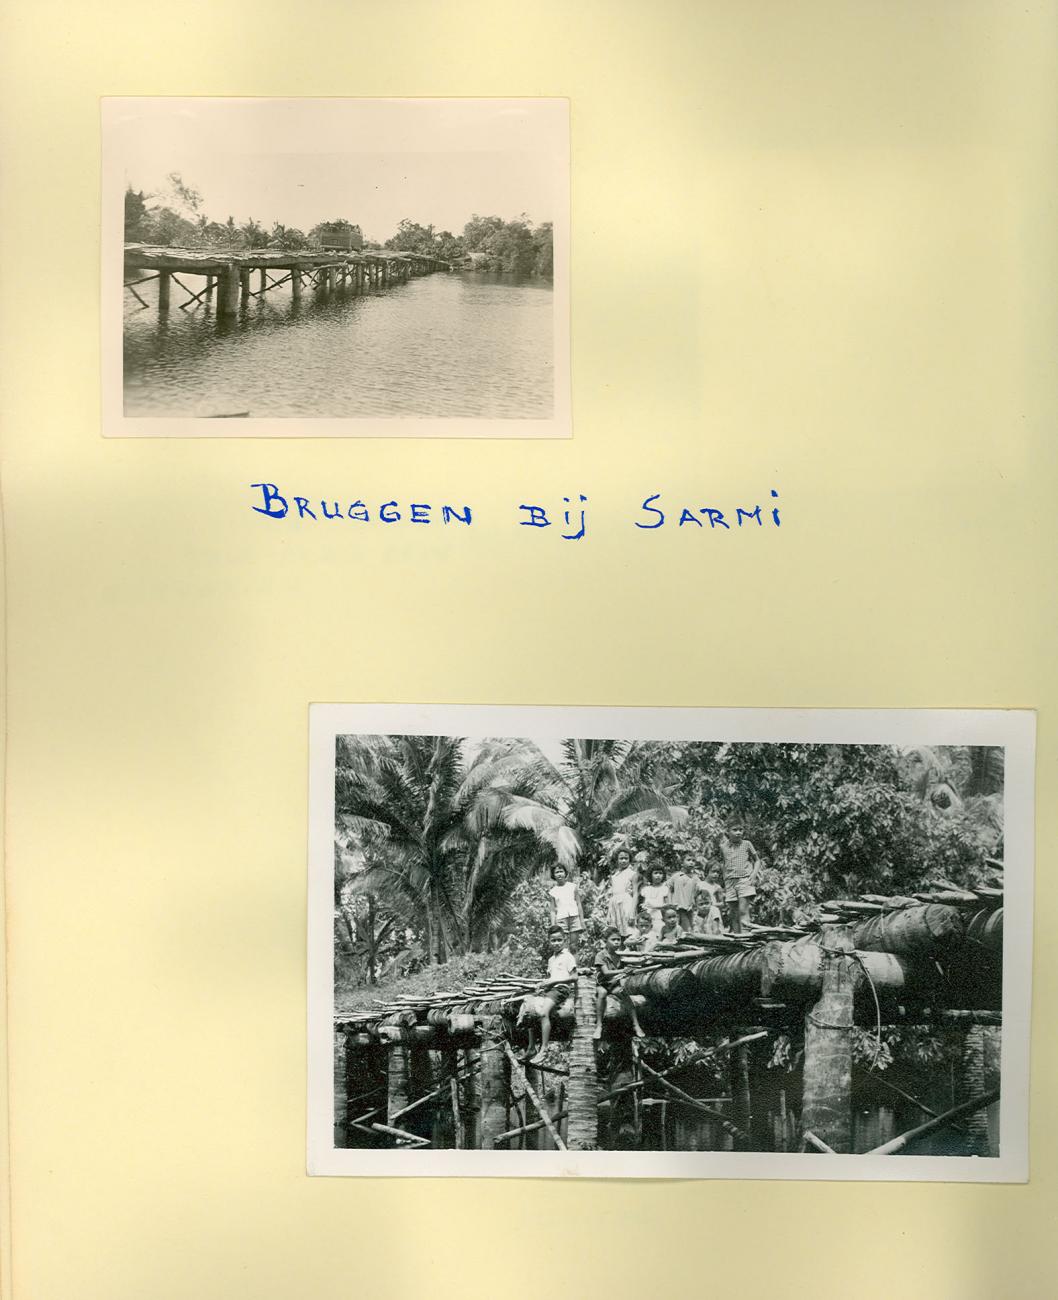 BD/83/54 - 
Bridges at Sarmi with car and children
